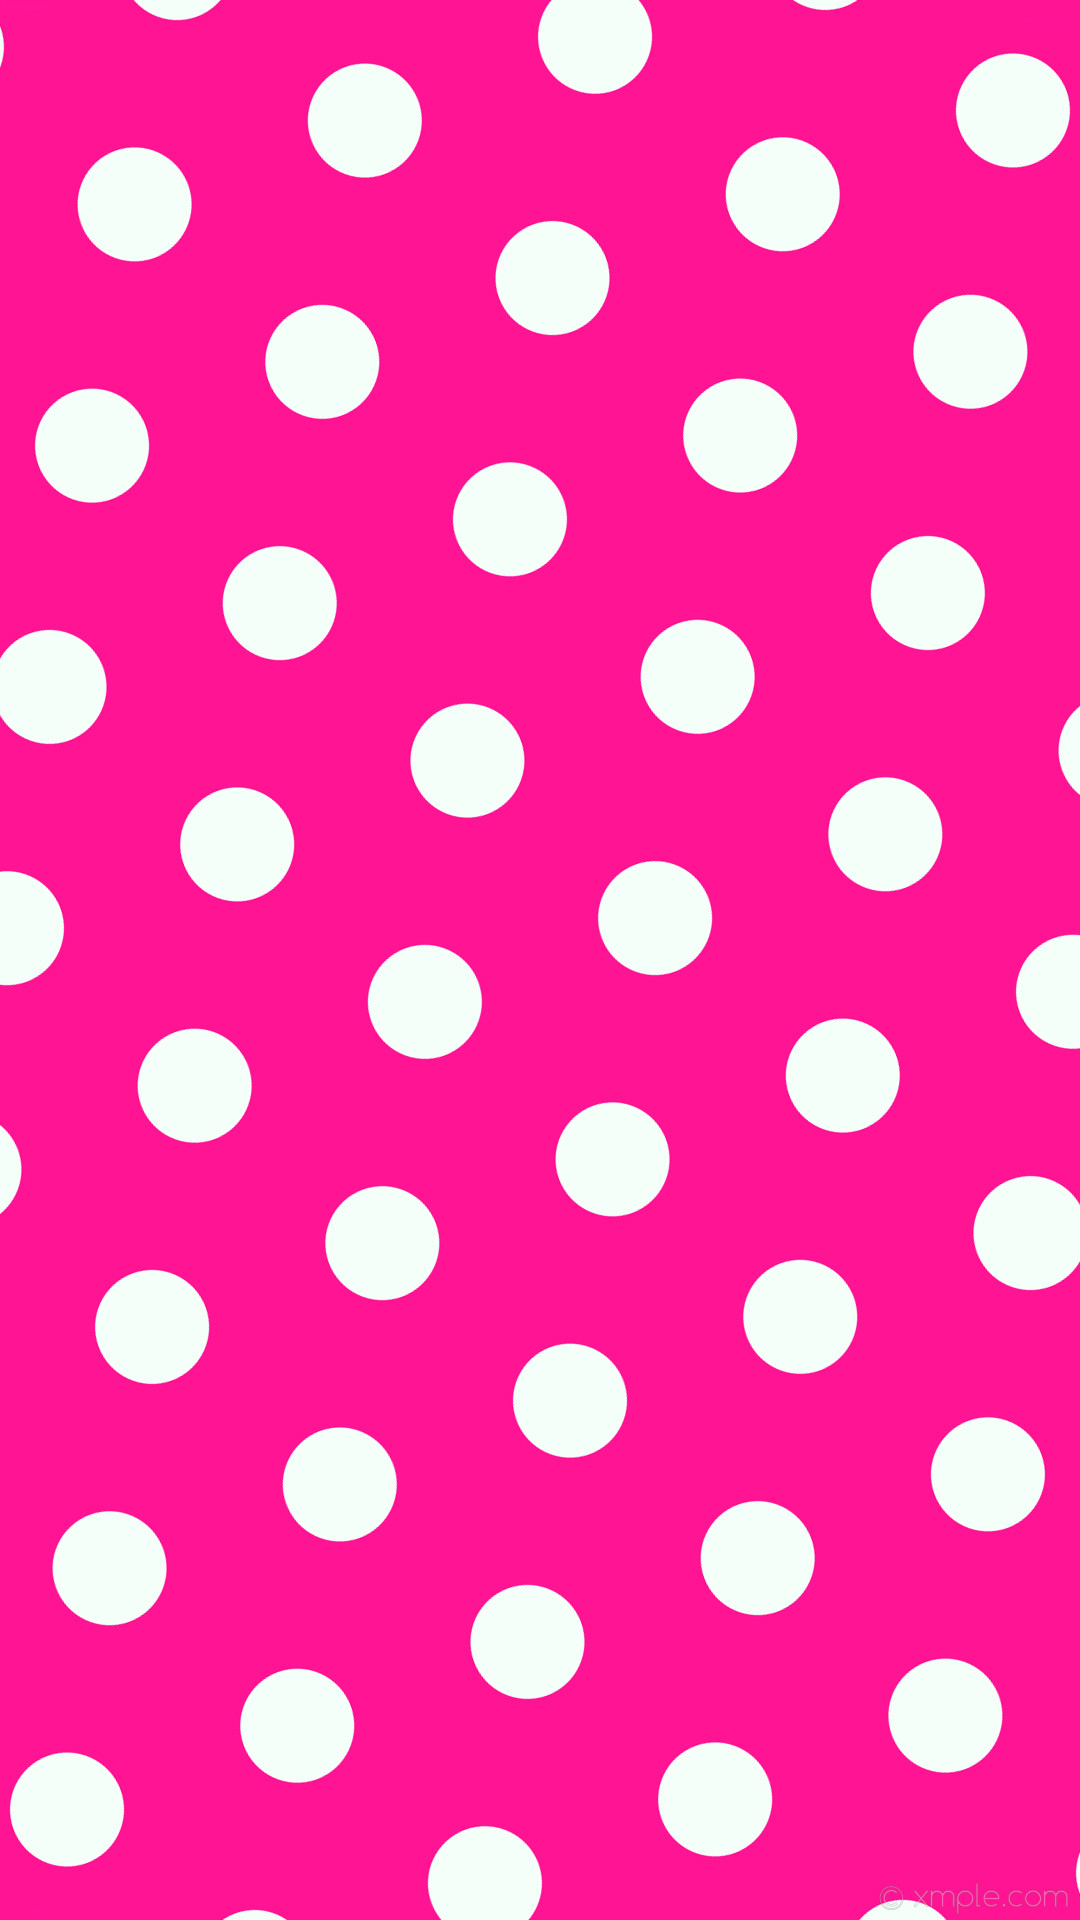 1080x1920 wallpaper hexagon pink polka dots white deep pink mint cream #ff1493  #f5fffa diagonal 20